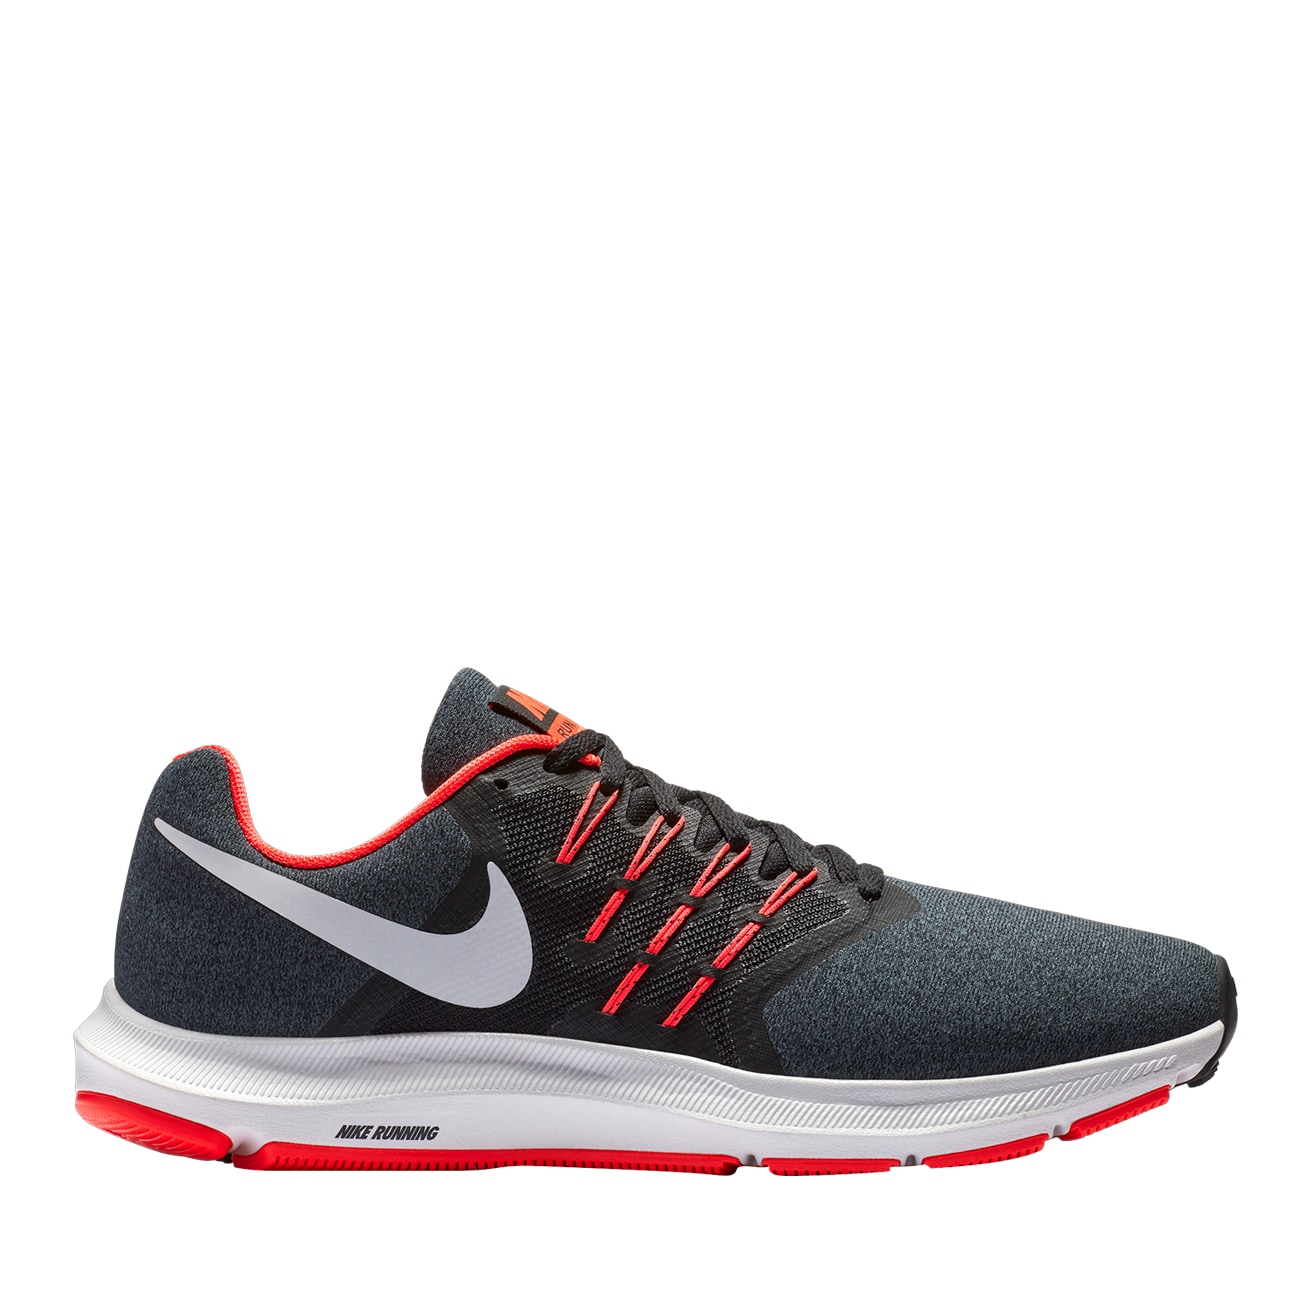 Nike Run Swift Runner | The Shoe Company